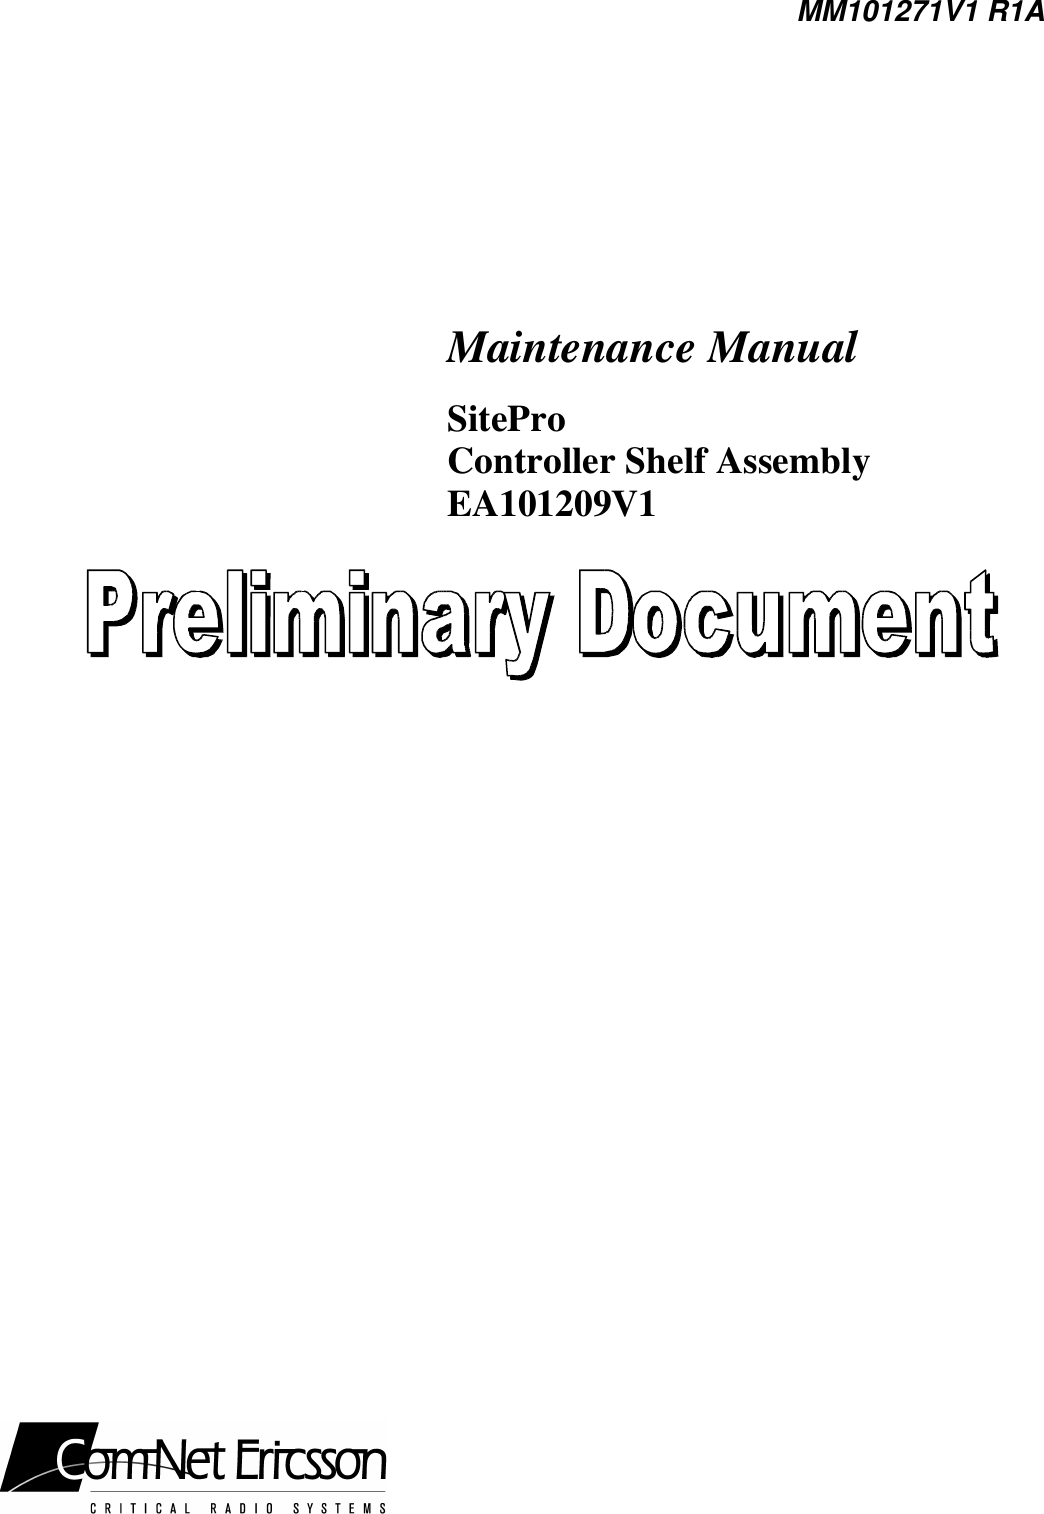 MM101271V1 R1AMaintenance ManualSiteProController Shelf AssemblyEA101209V1